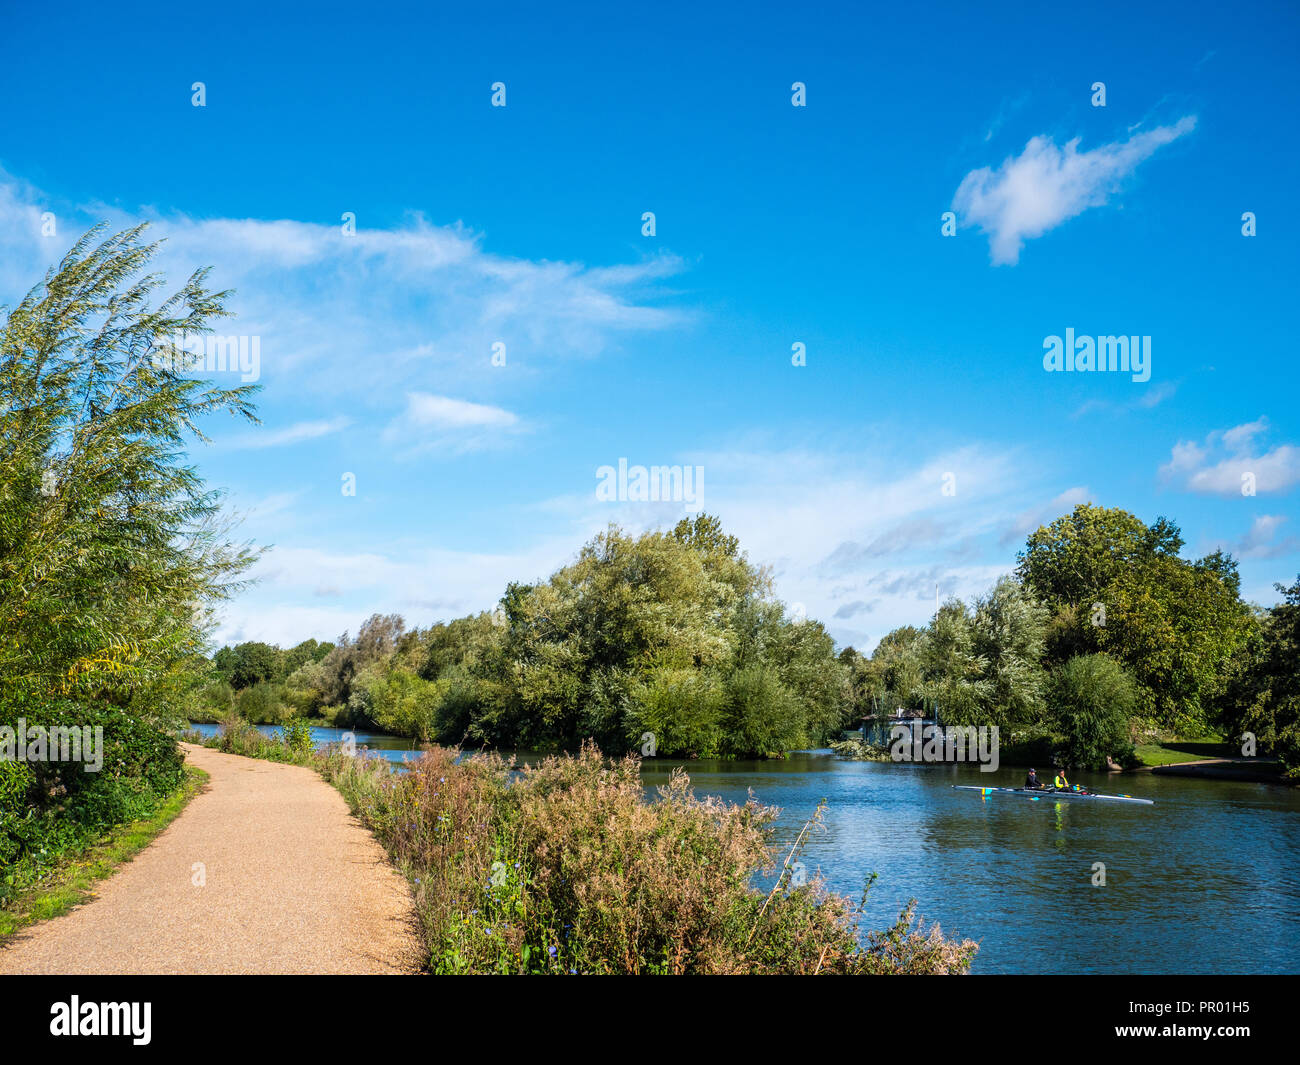 River Kayaking, Thames Path, River Thames, Oxford, Oxfordshire, England, UK, GB. Stock Photo